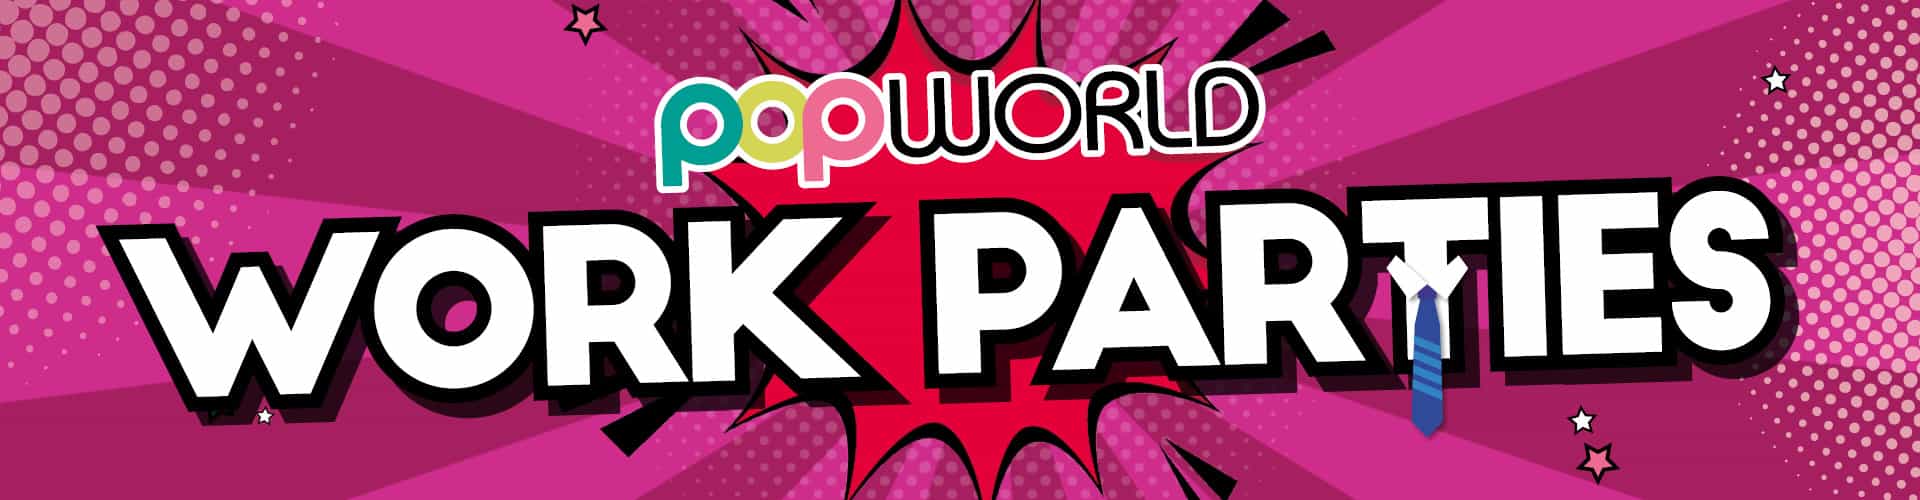 Work Parties at Popworld Birmingham